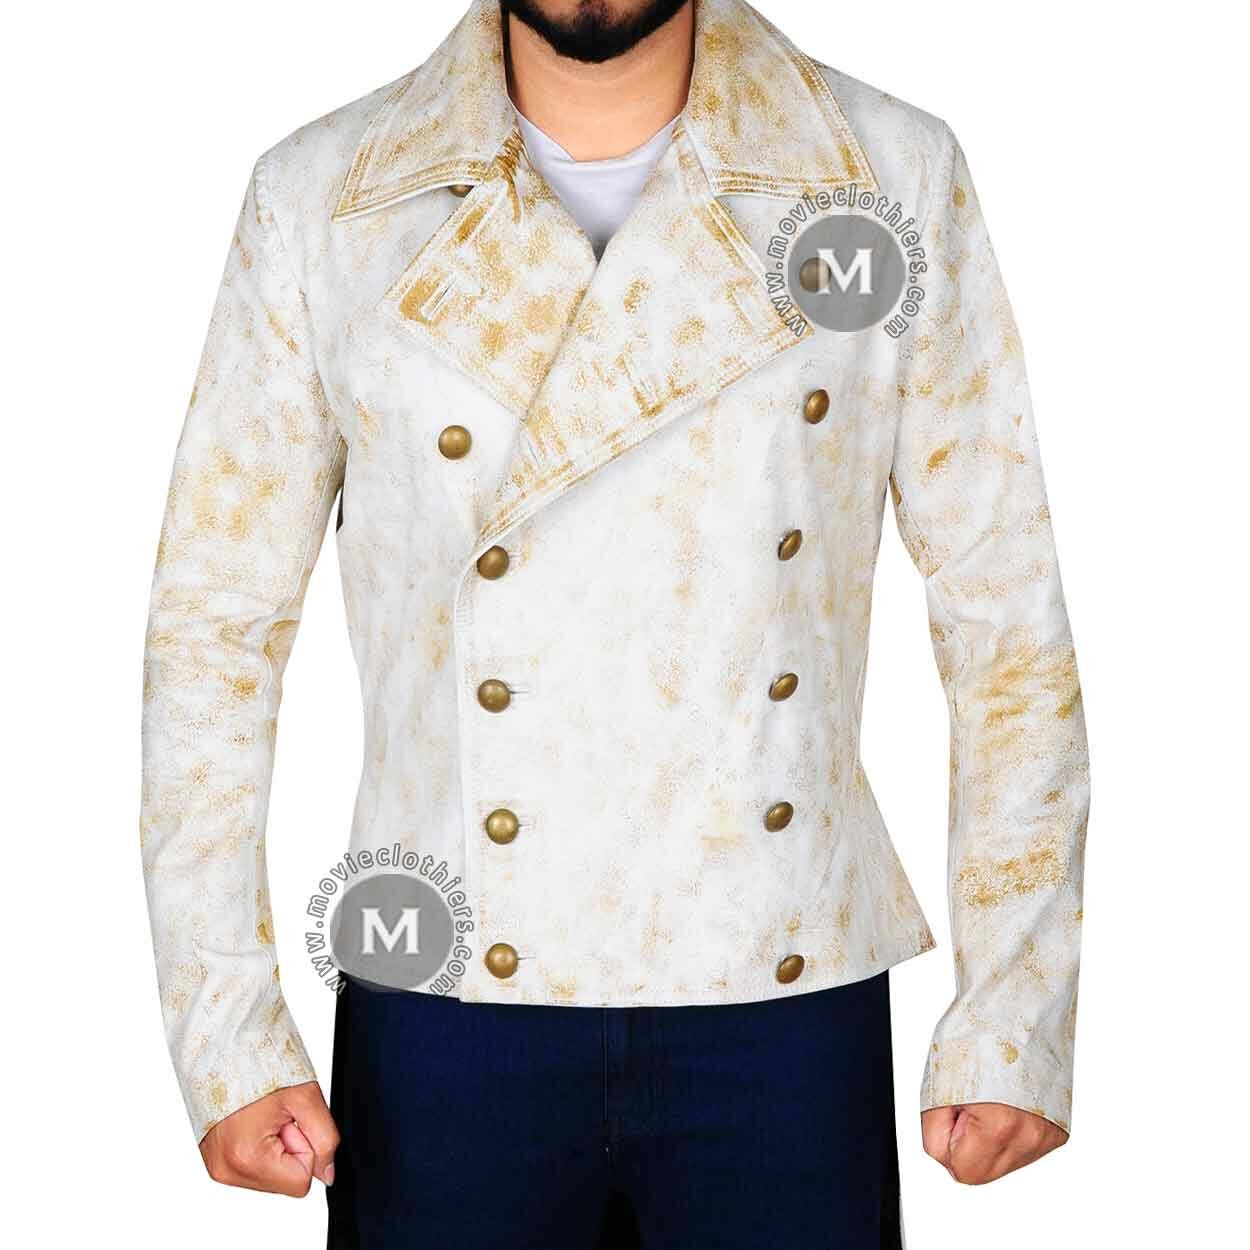 Charlie Prince Jacket